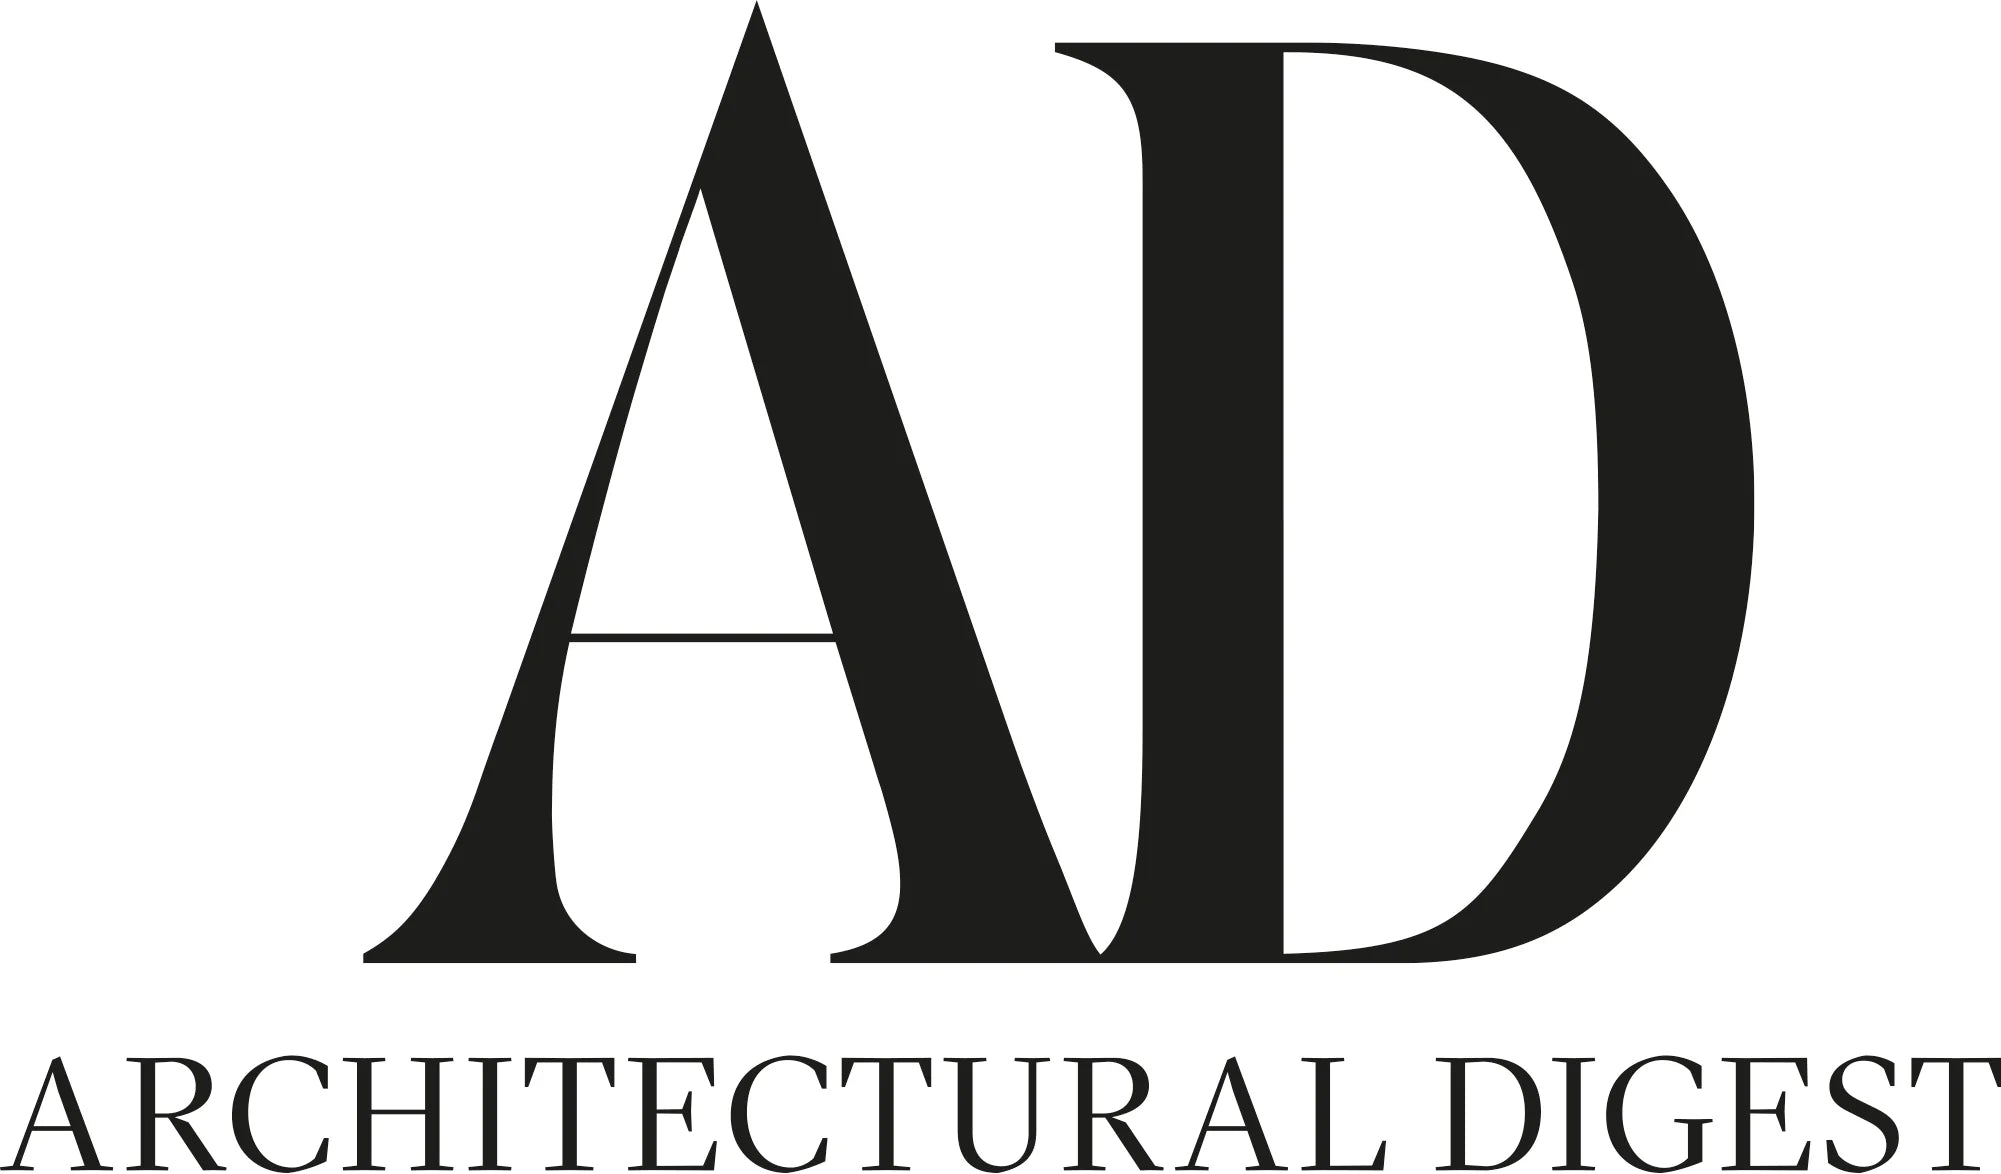 pf-91ed7dda--Architectural-Digest-logo.webp__PID:4912a349-29e3-47bb-8e12-fafba8a6228b